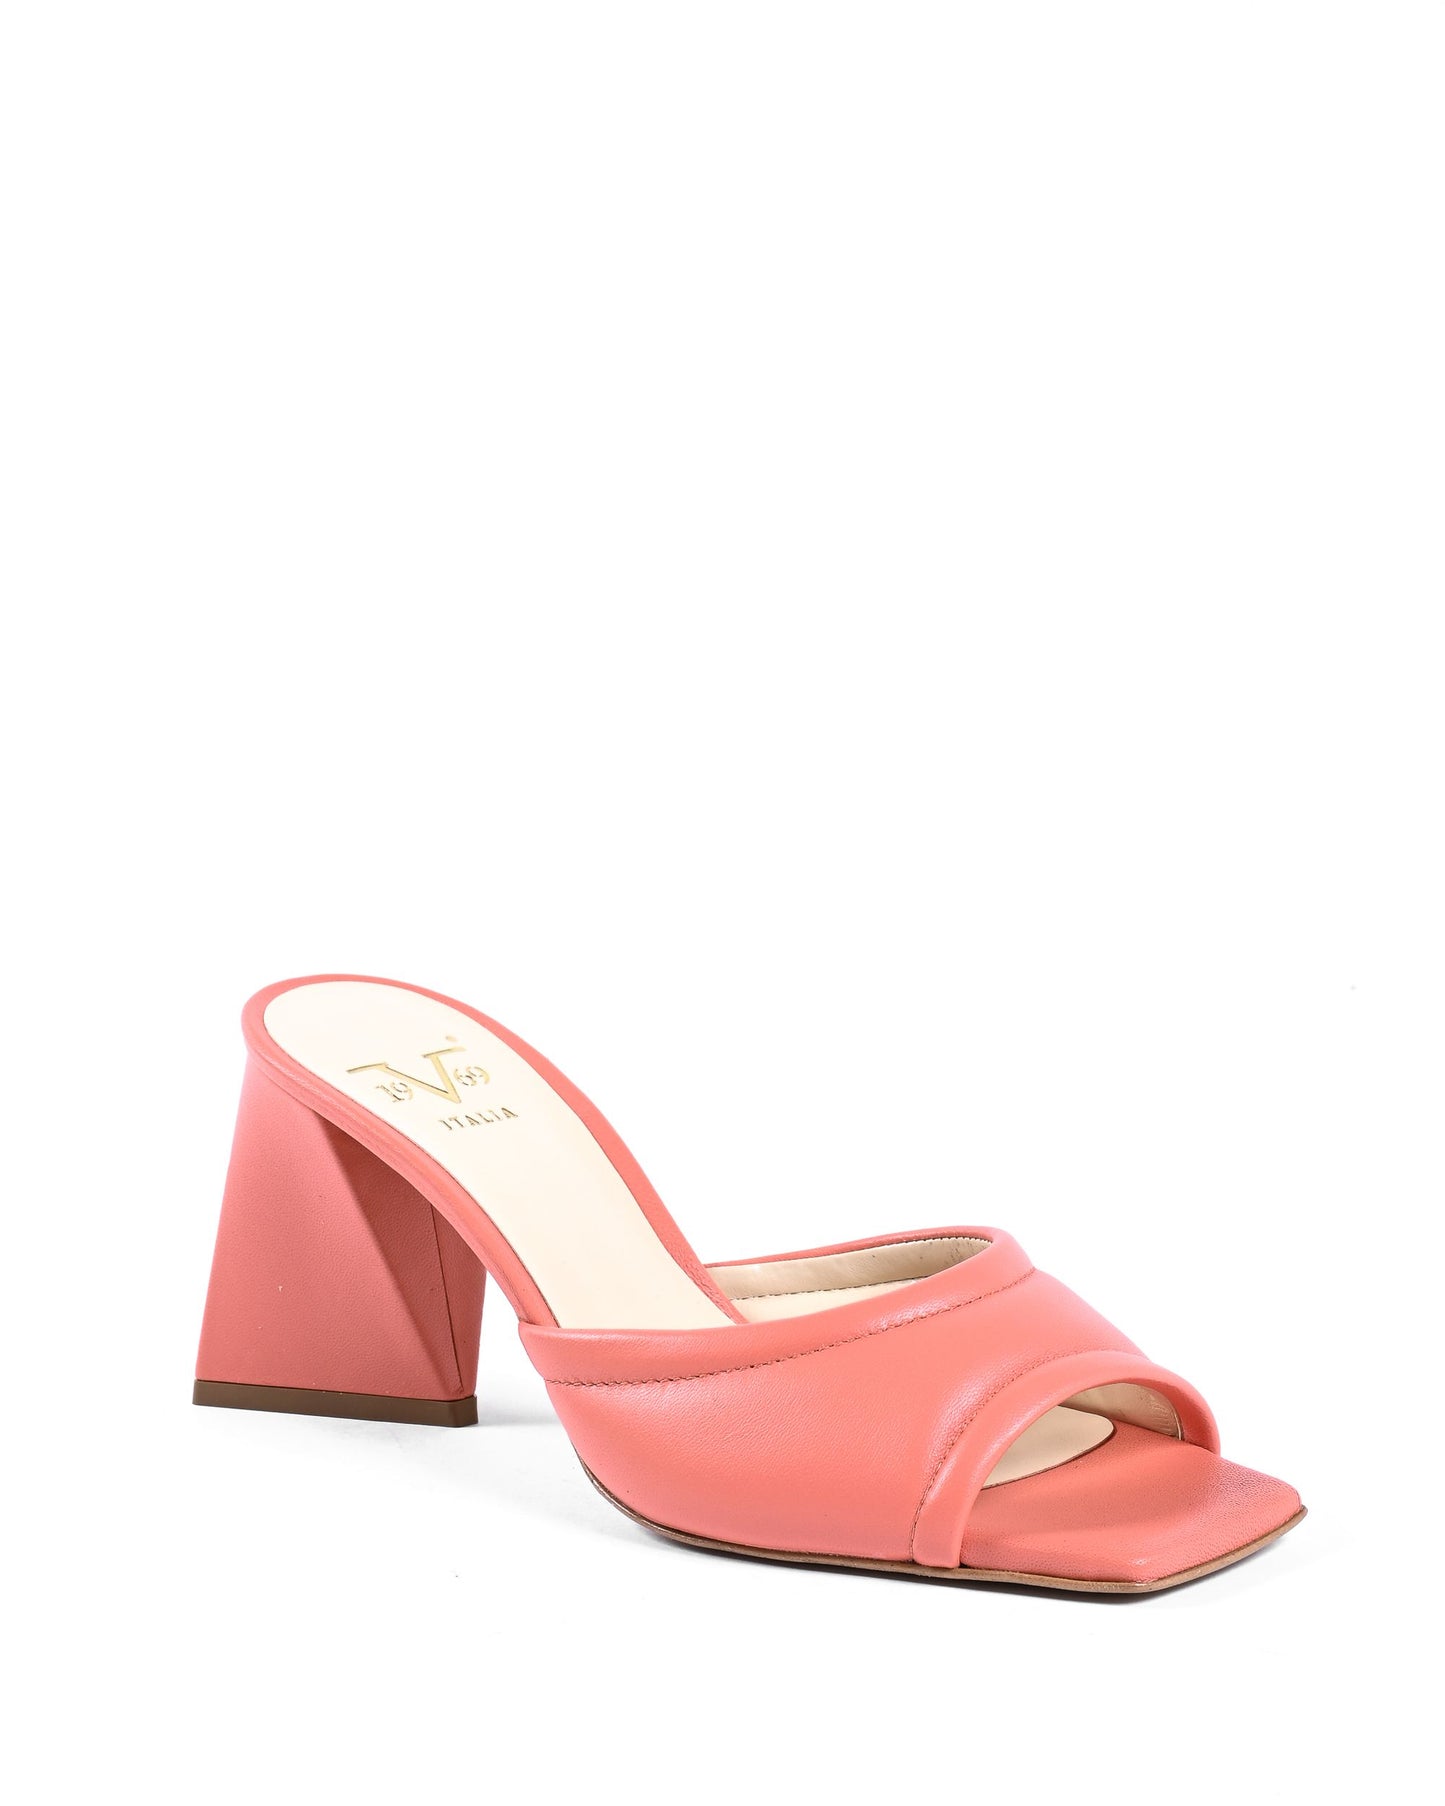 19V69 Italia Womens Sandal Pink SIMONA NAPPA PESCA